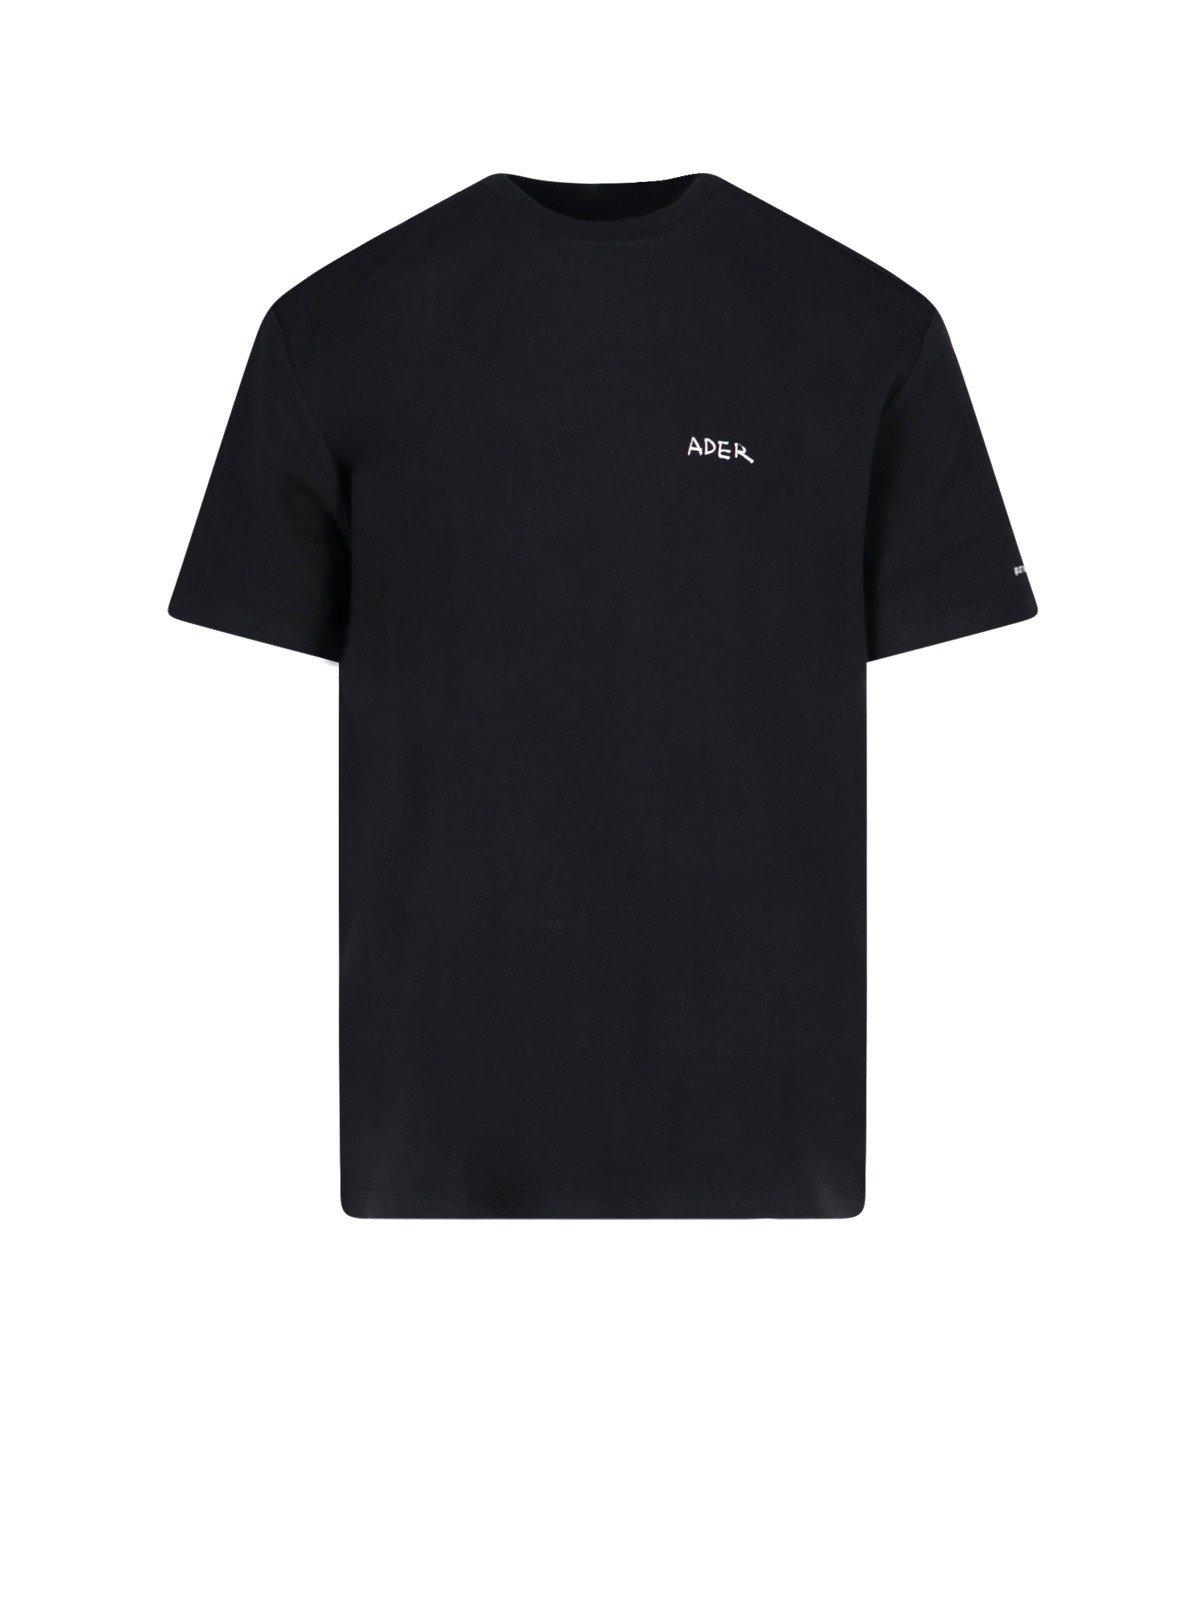 ADER error Cotton Oversized Graphic Print T-shirt in Black for Men - Lyst